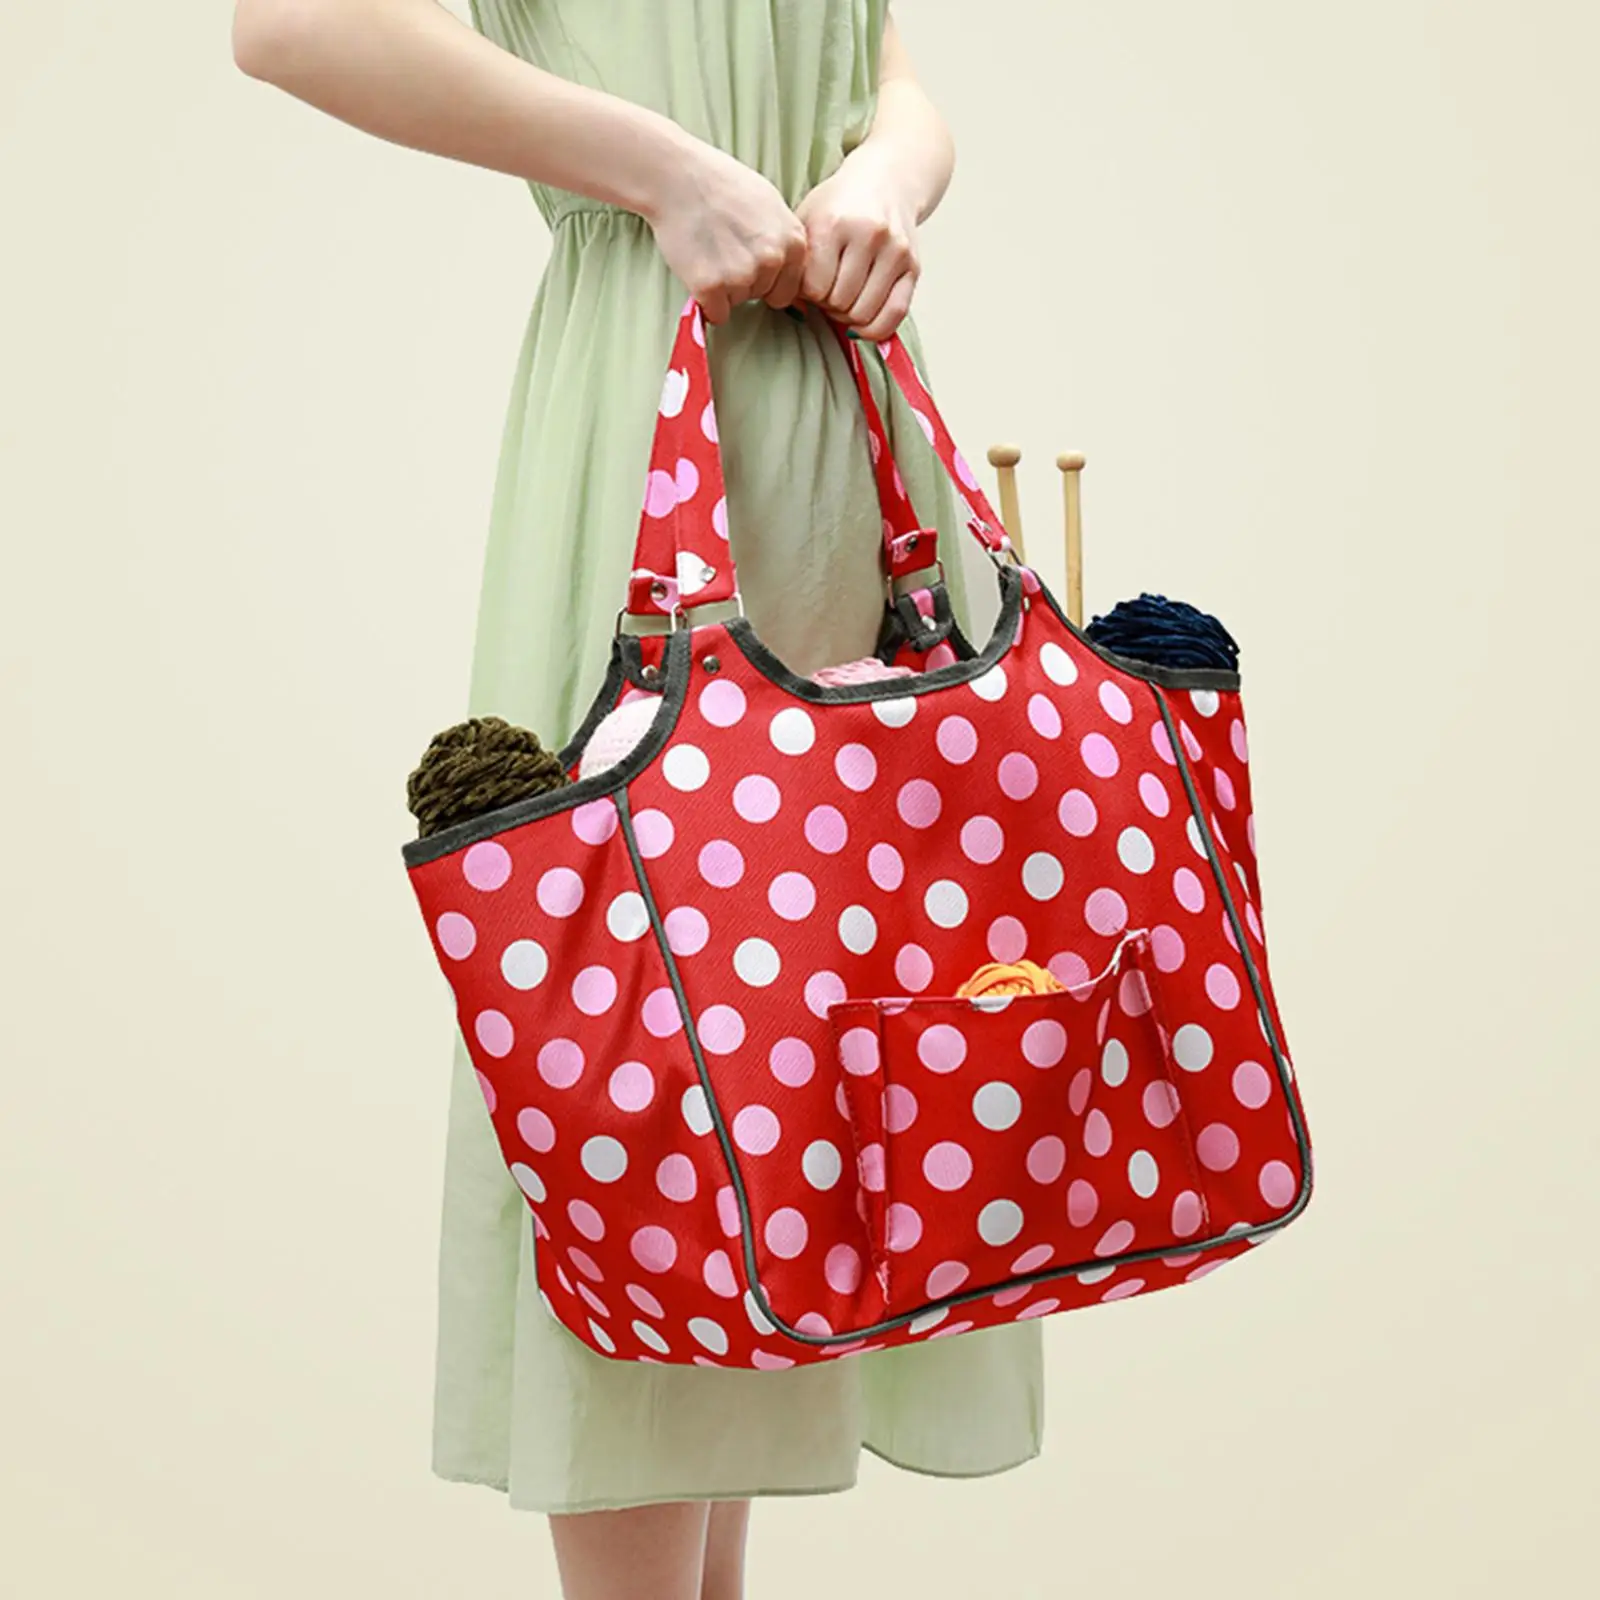 Knitting Bag Red Polka dots print Storage Organizer for Knitting Supplies